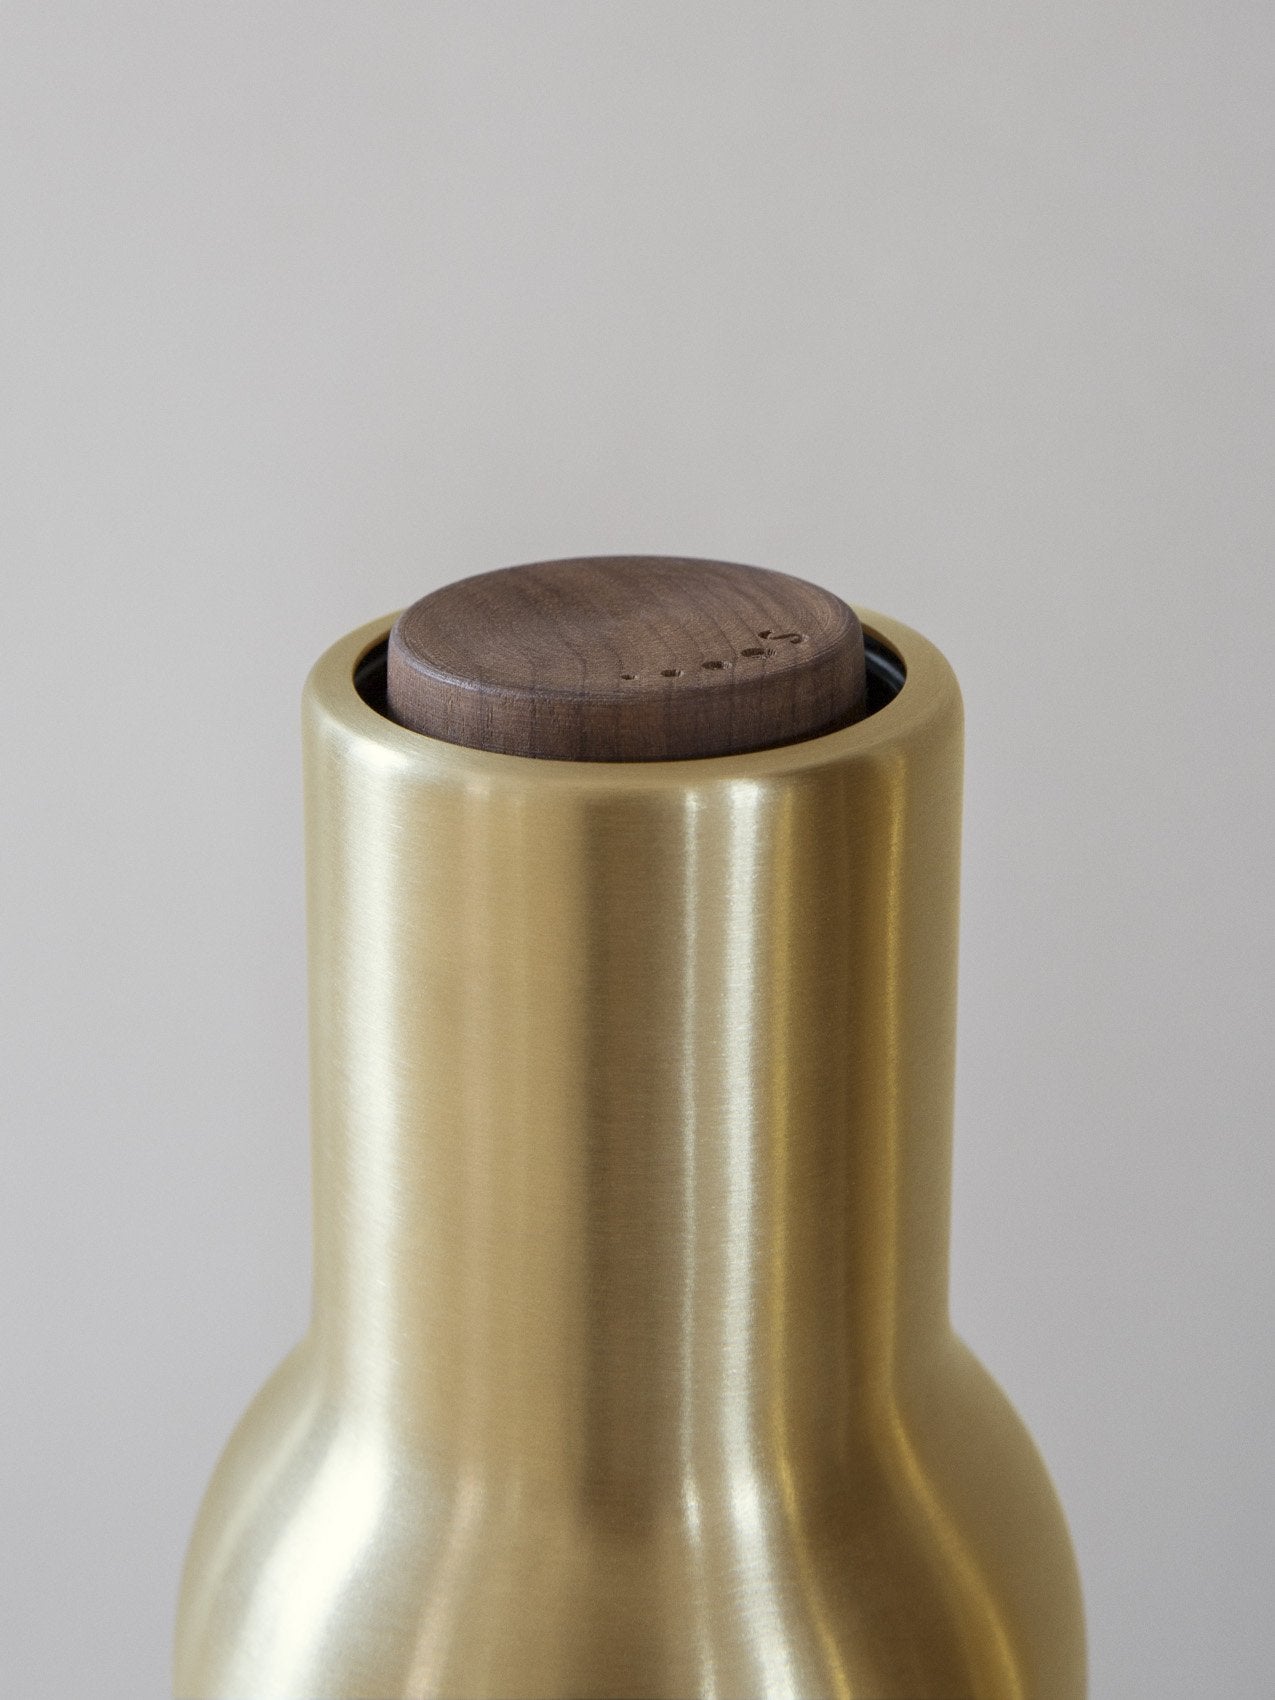 Bottle Grinder, Small, 2-Piece-Spice Mill-Norm Architects-menu-minimalist-modern-danish-design-home-decor